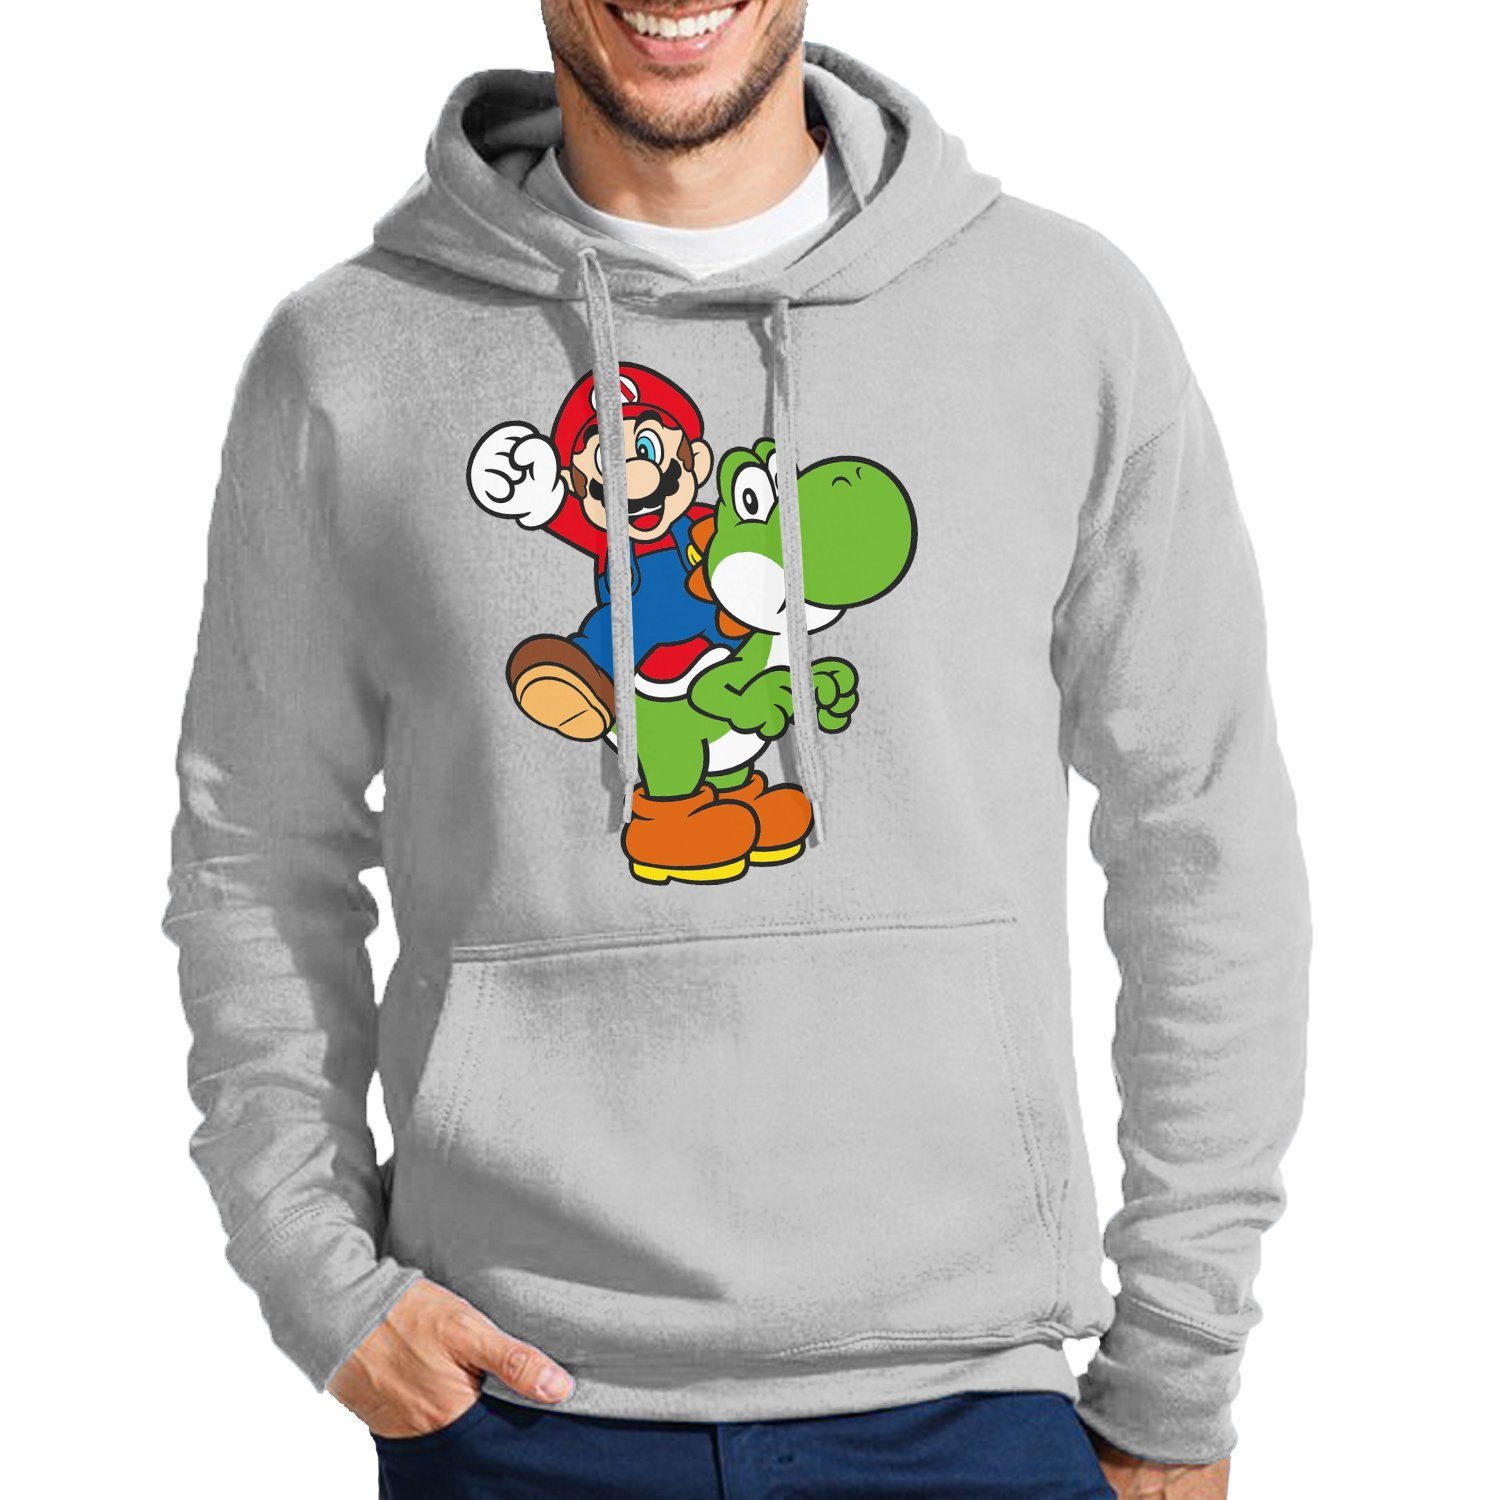 Konsole Hoodie Brownie Kaputze Luigi Super Nintendo & Mario mit & Herren Blondie Retro Yoshi Grau